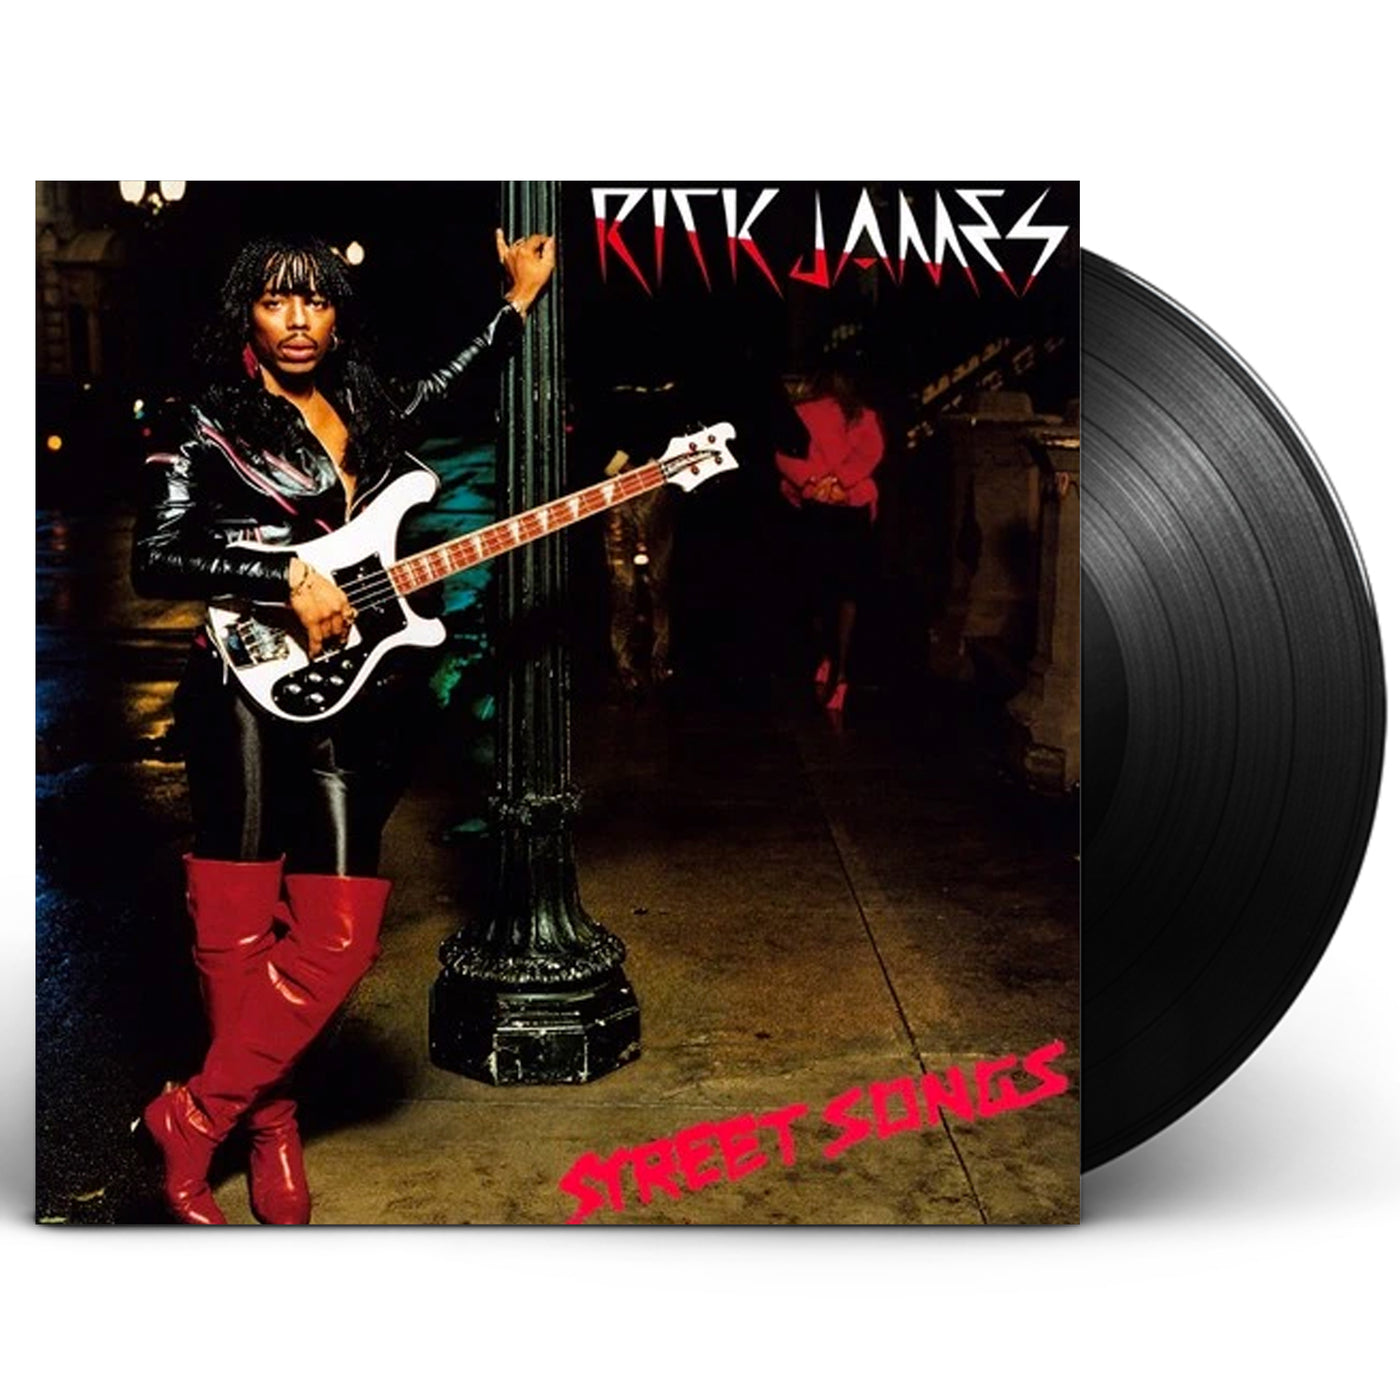 Rick James "Street Songs" LP 180 Gram Vinyl